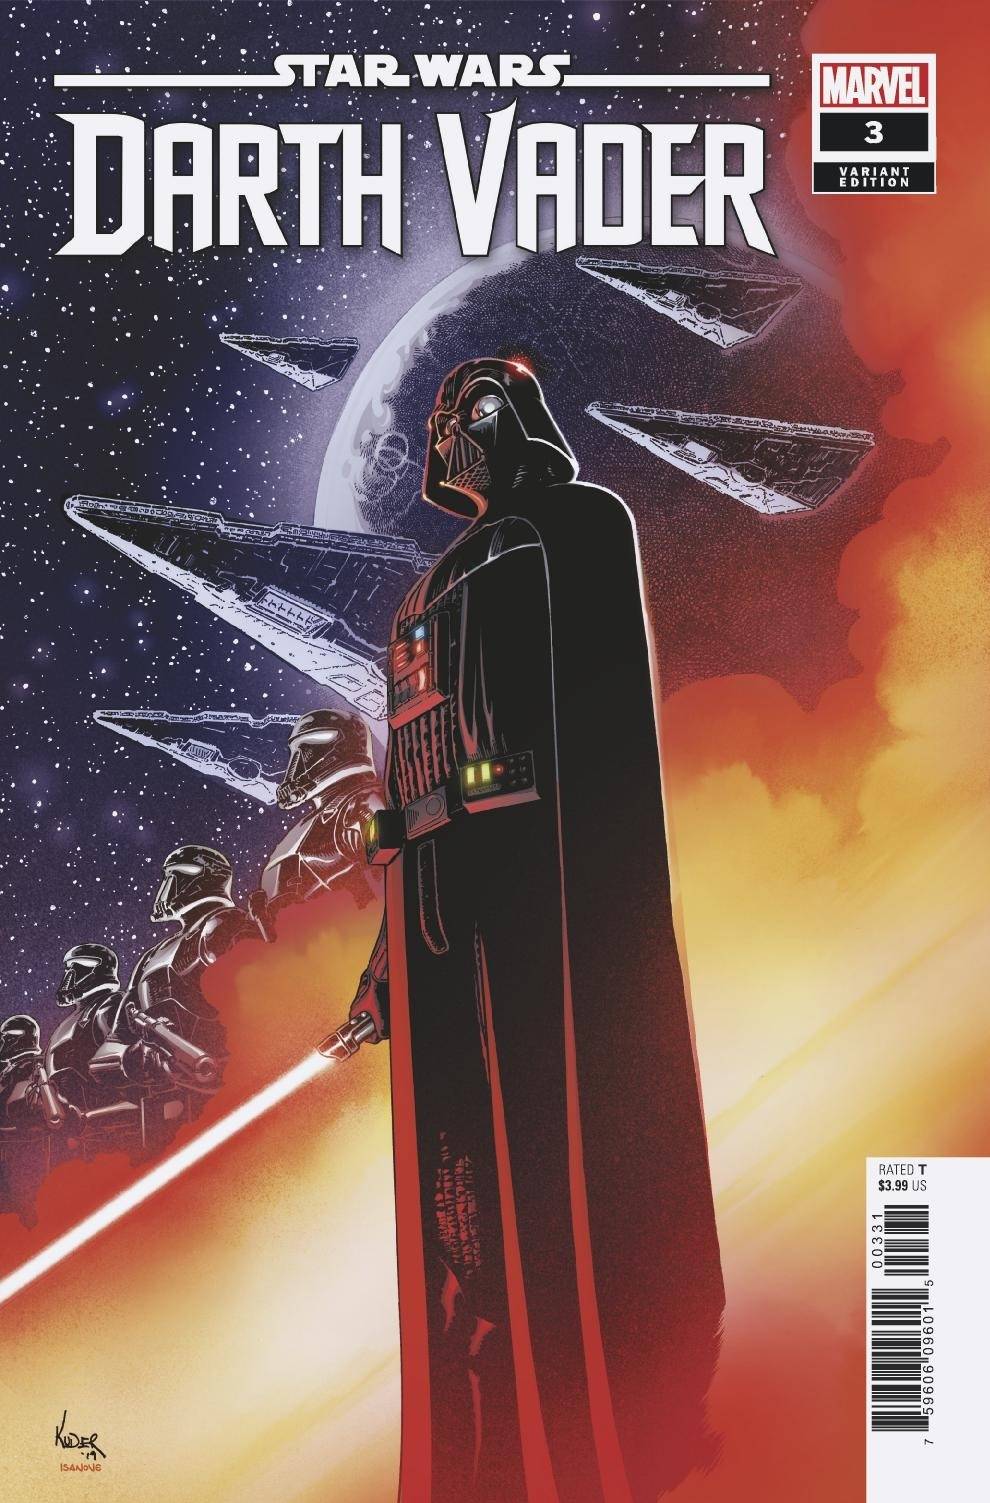 Darth Vader #3 (Aaron Kuder Variant Cover) (29.07.2020)